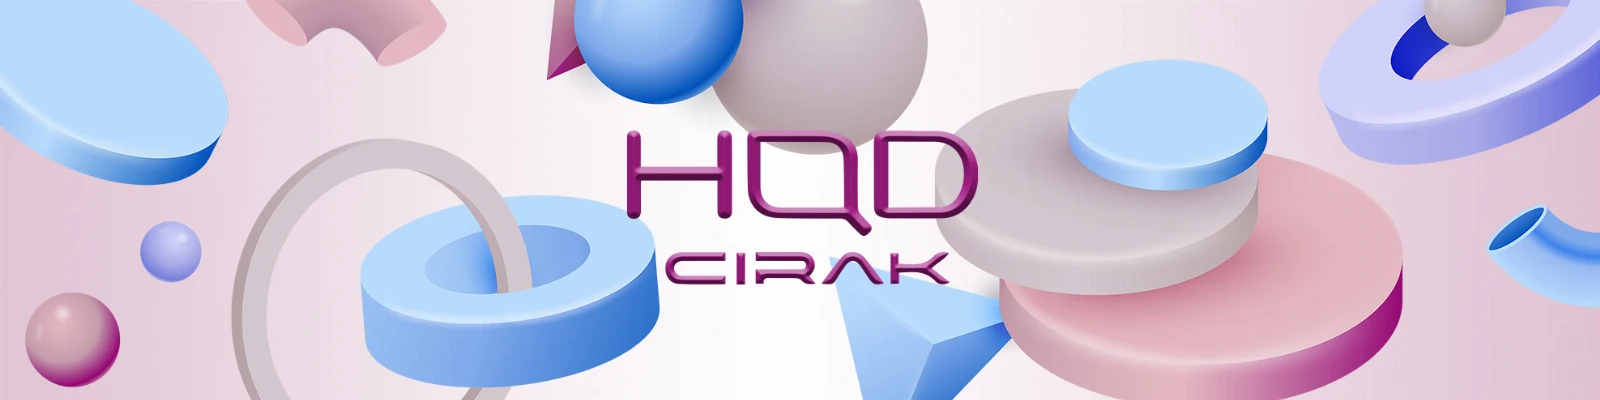 HQD Cirak Vape Pod System Banner Main Kategorie Bild Hookain Onlineshop